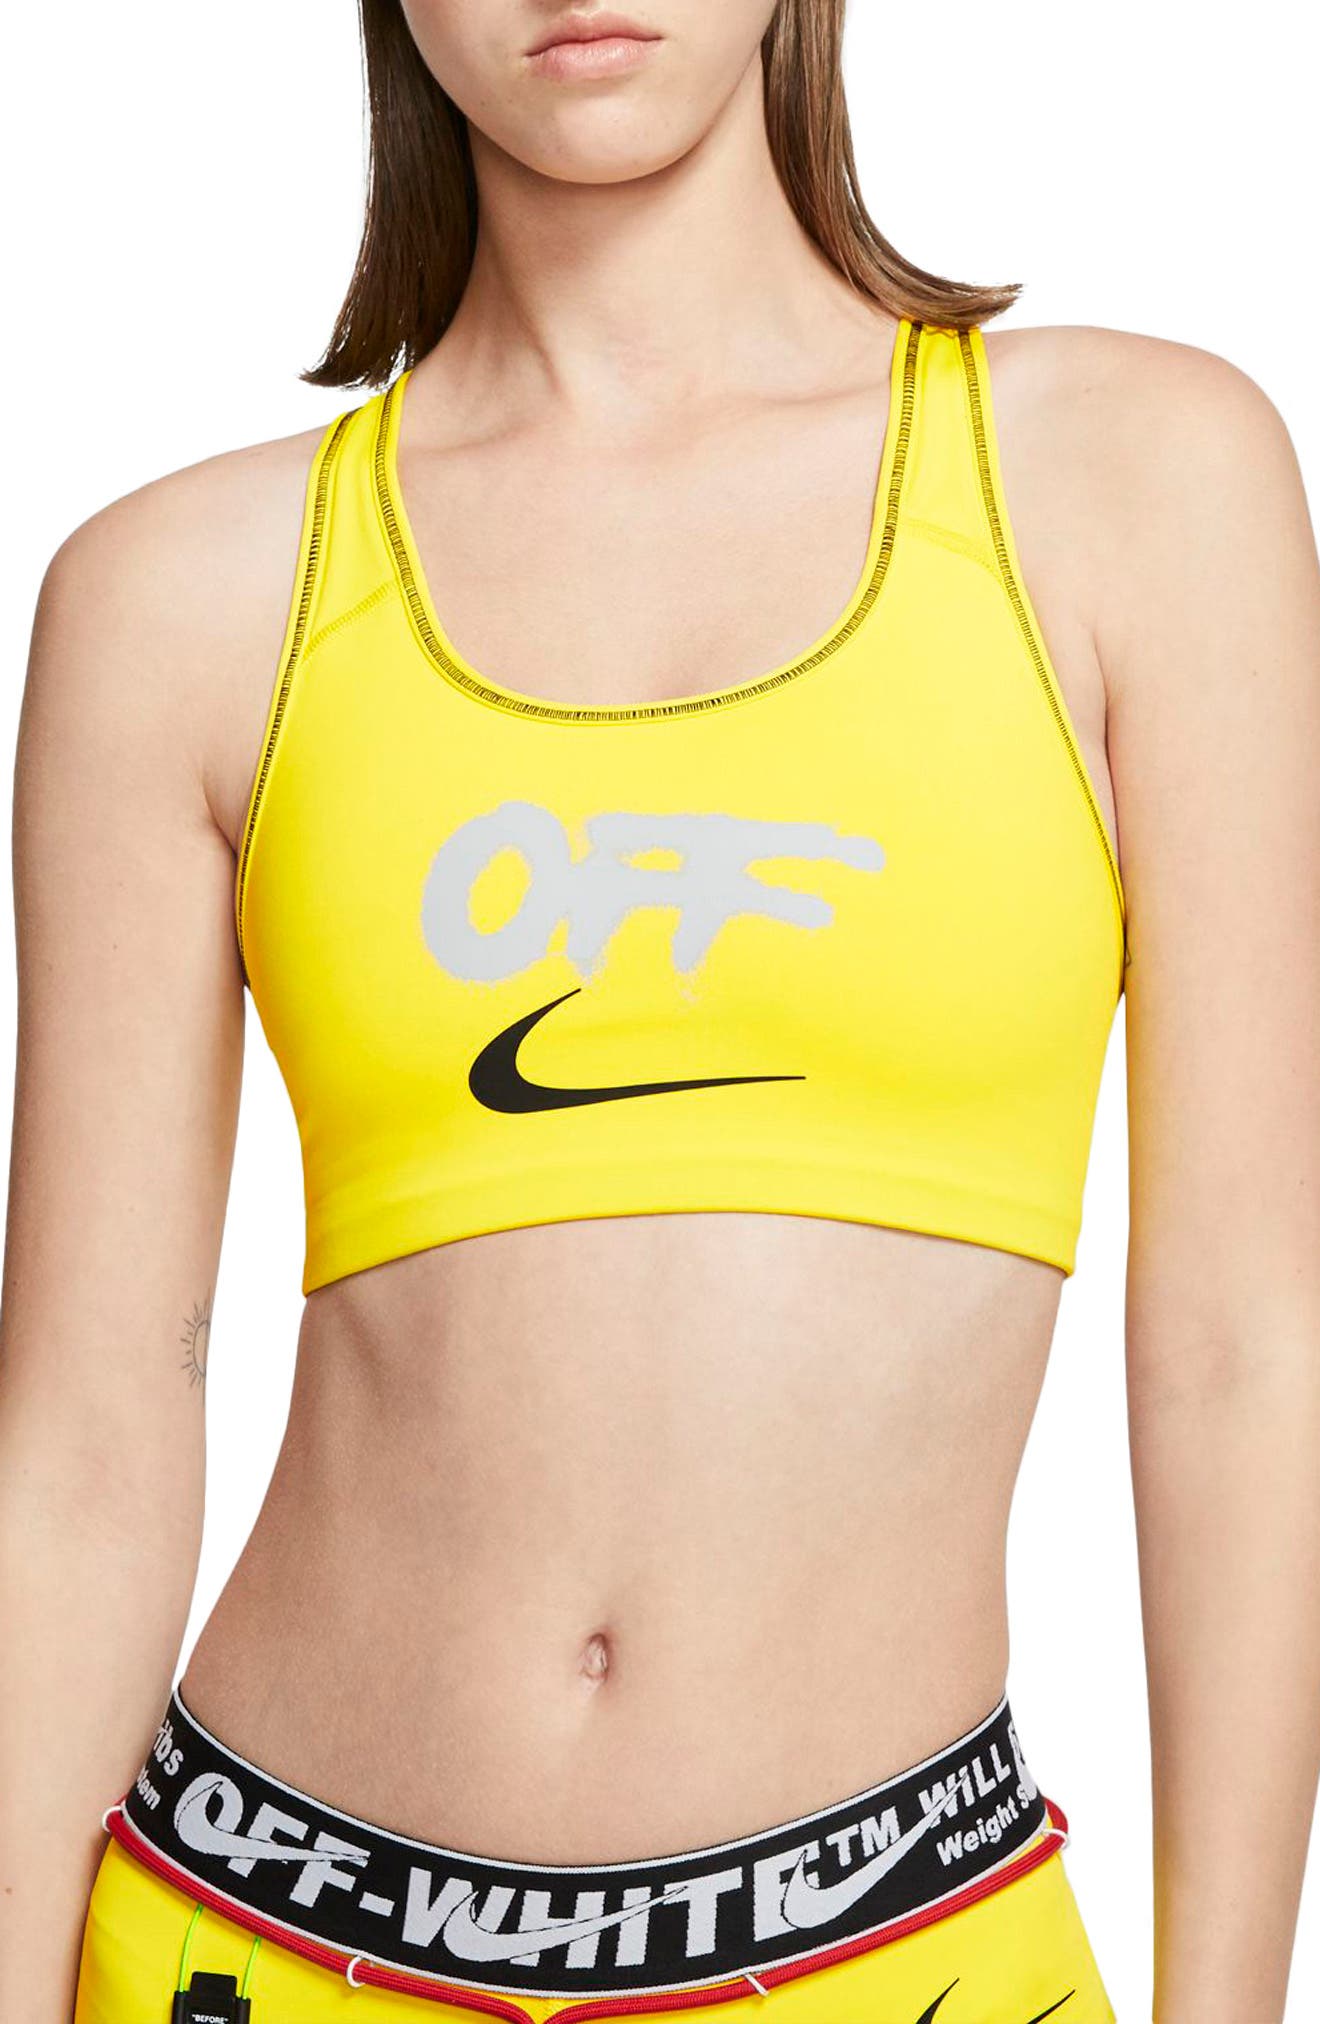 off white sports bra yellow